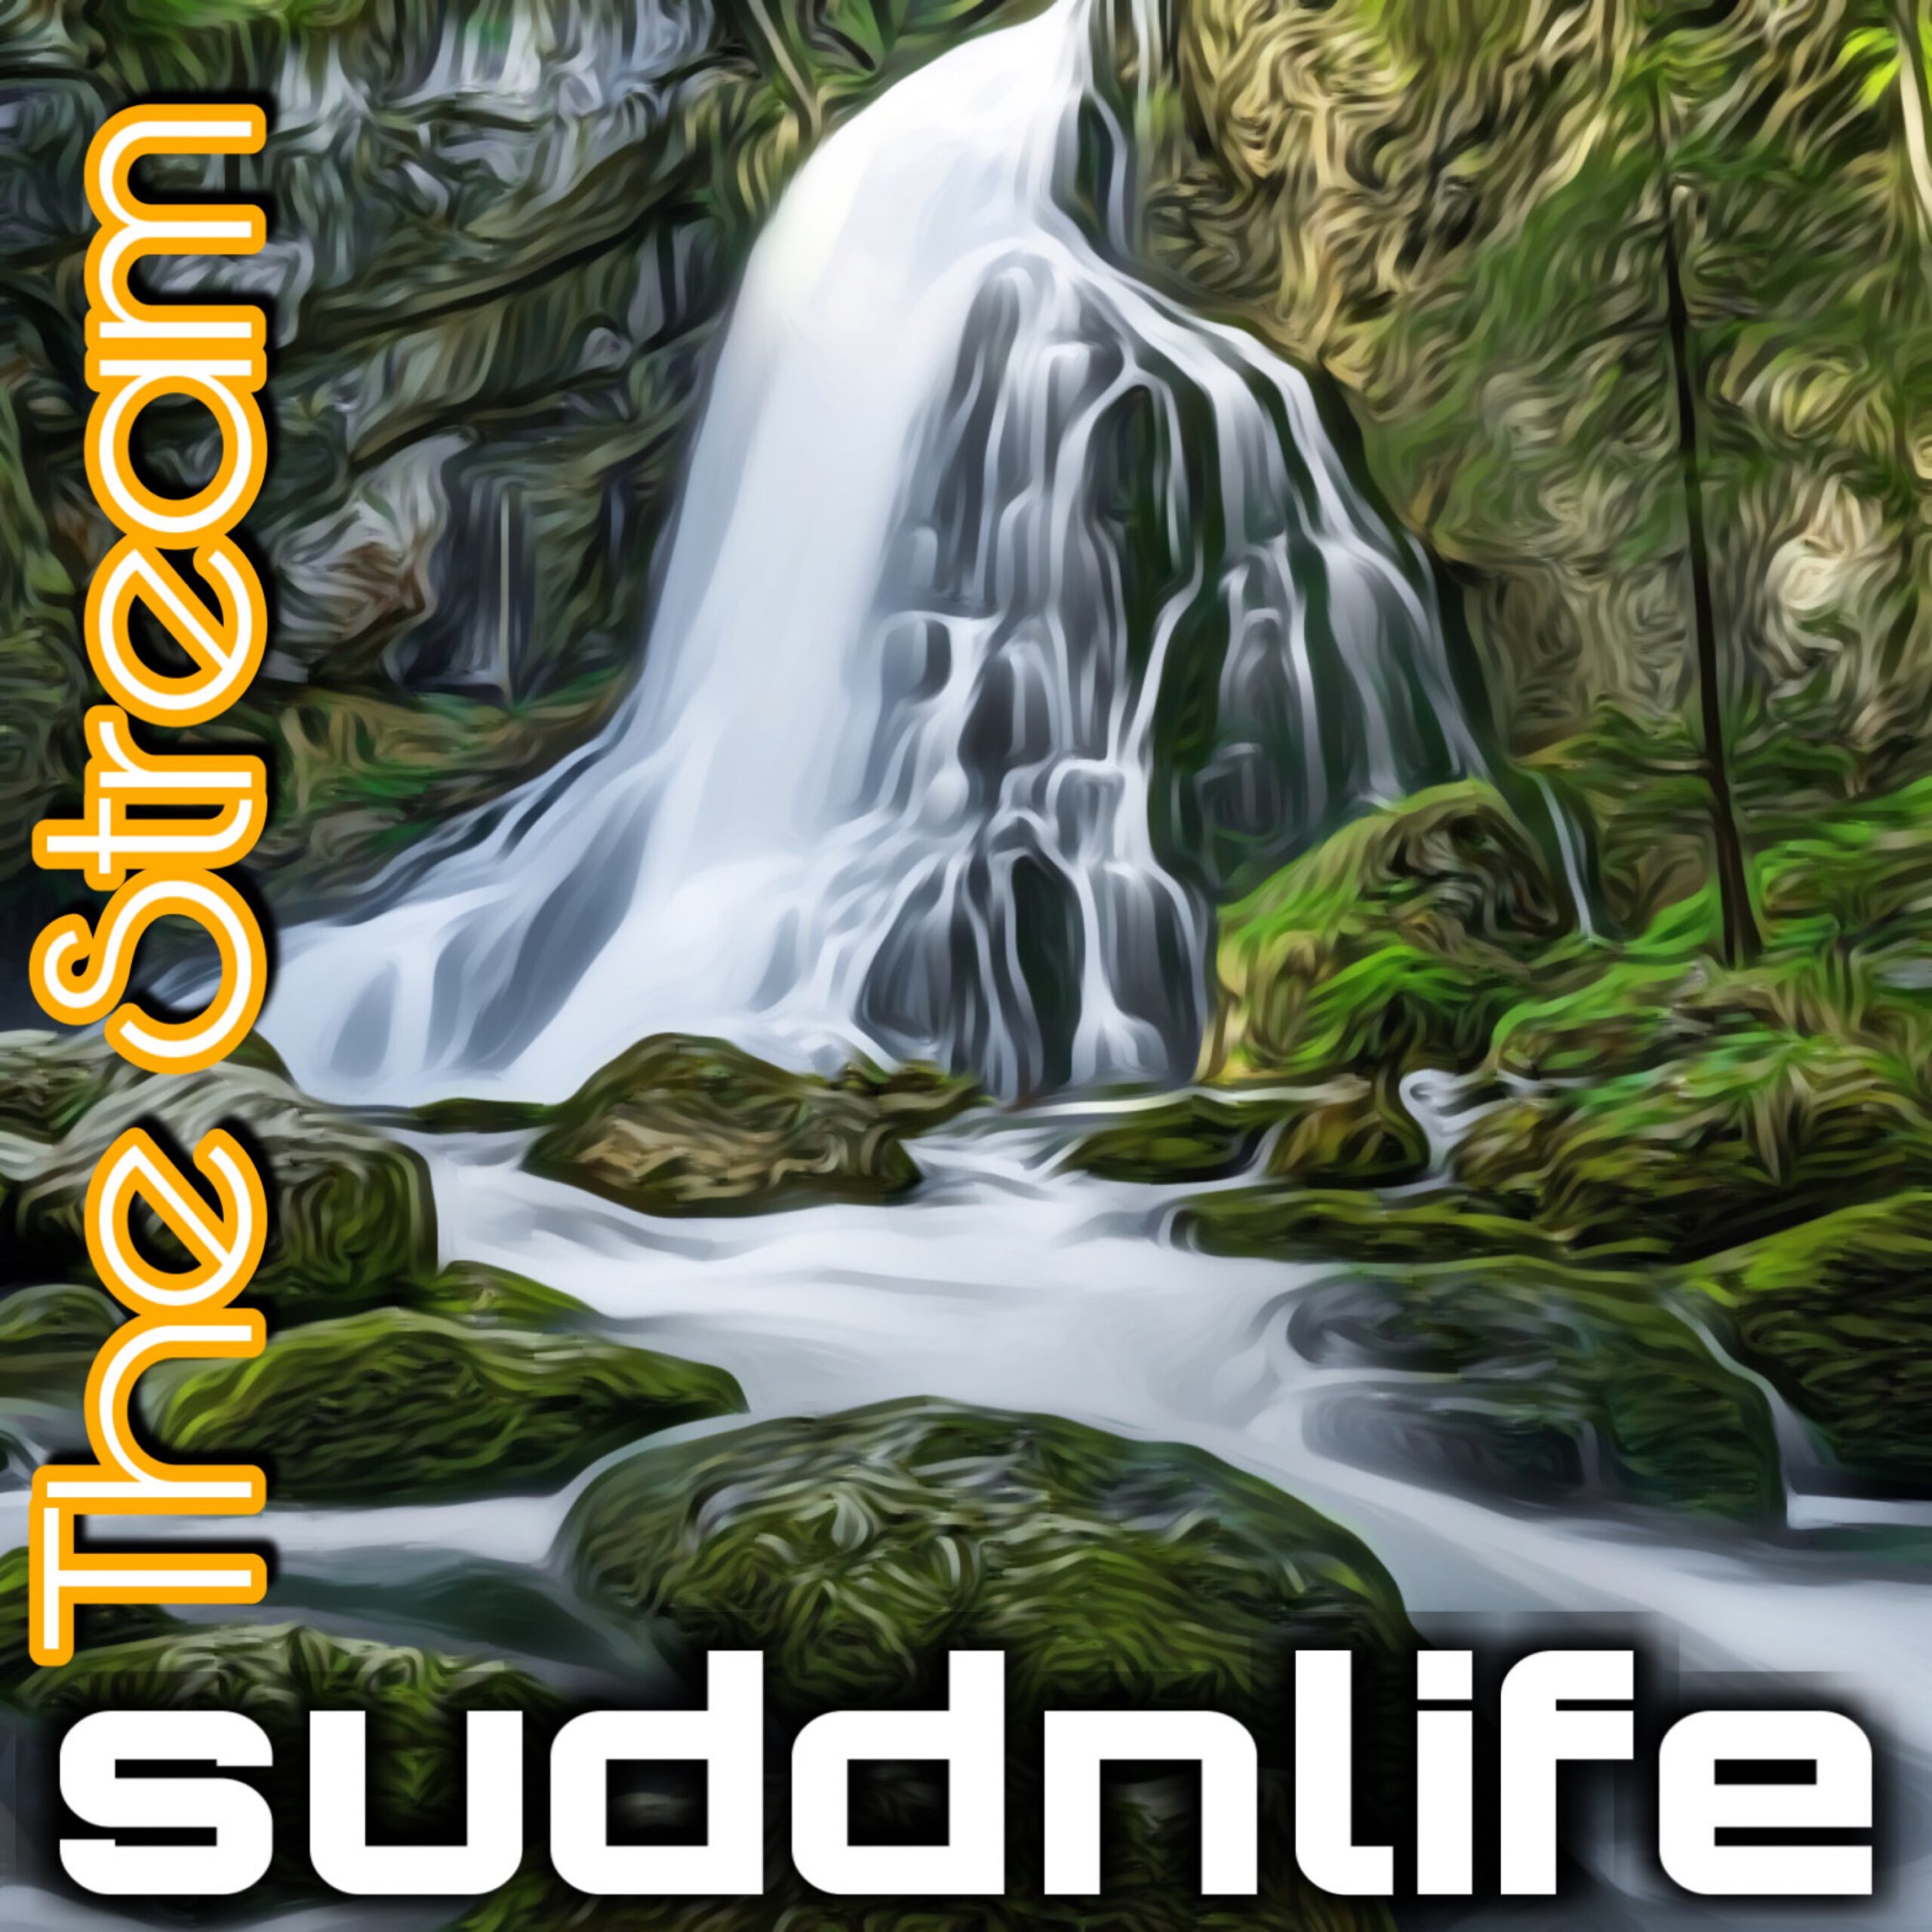 suddnlife - the stream